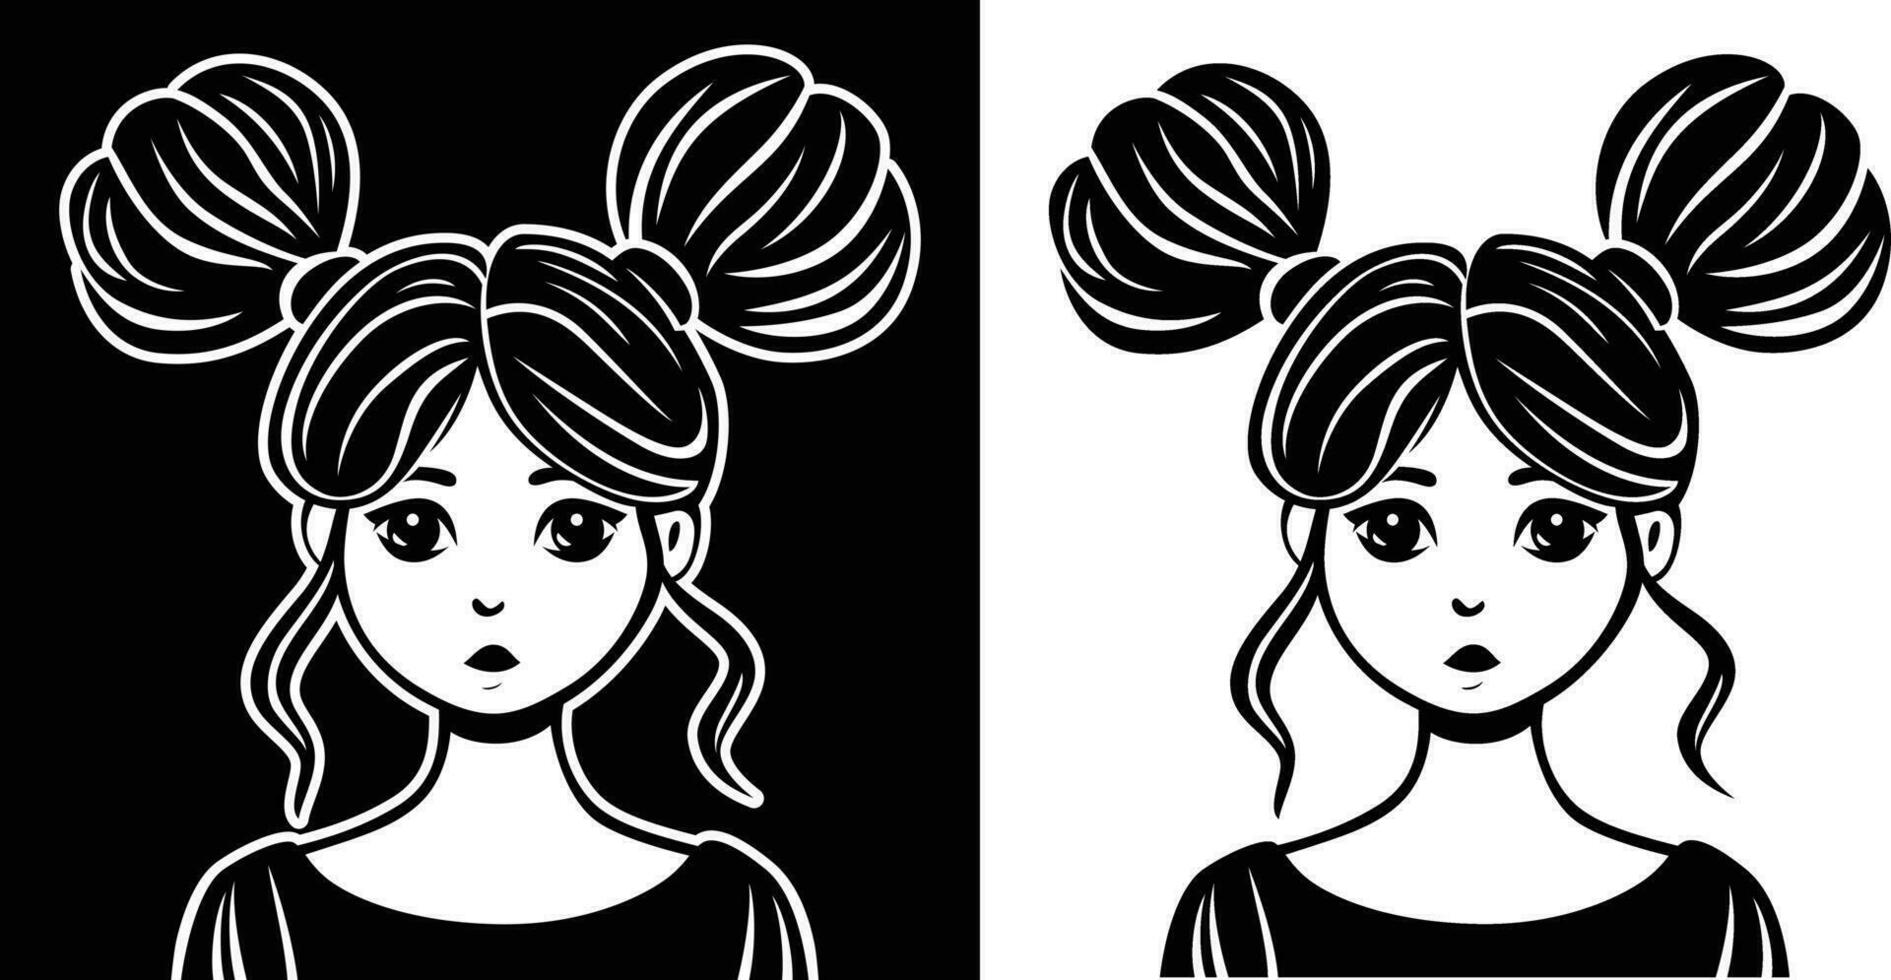 niña con dos pelo bollos vector ilustración, linda niña con espacio bollos, dos pelo bollos en parte superior de cabeza negro y blanco valores vector imagen